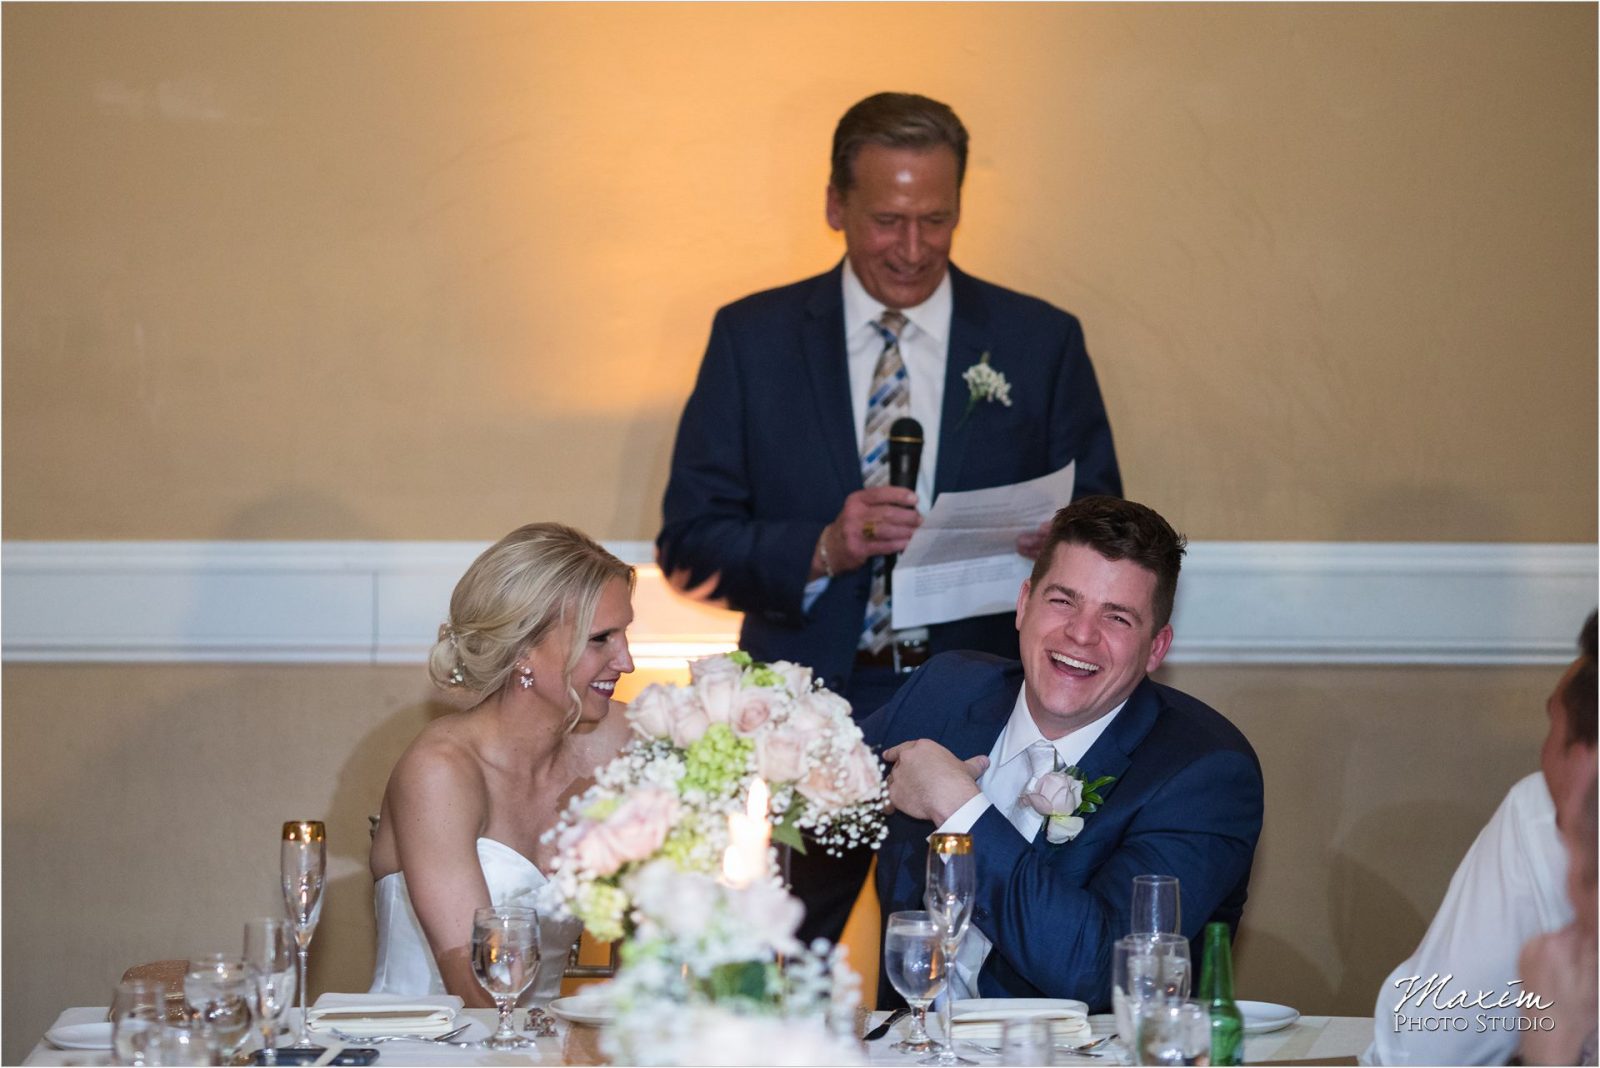 The Phoenix Cincinnati Wedding Reception Toasts